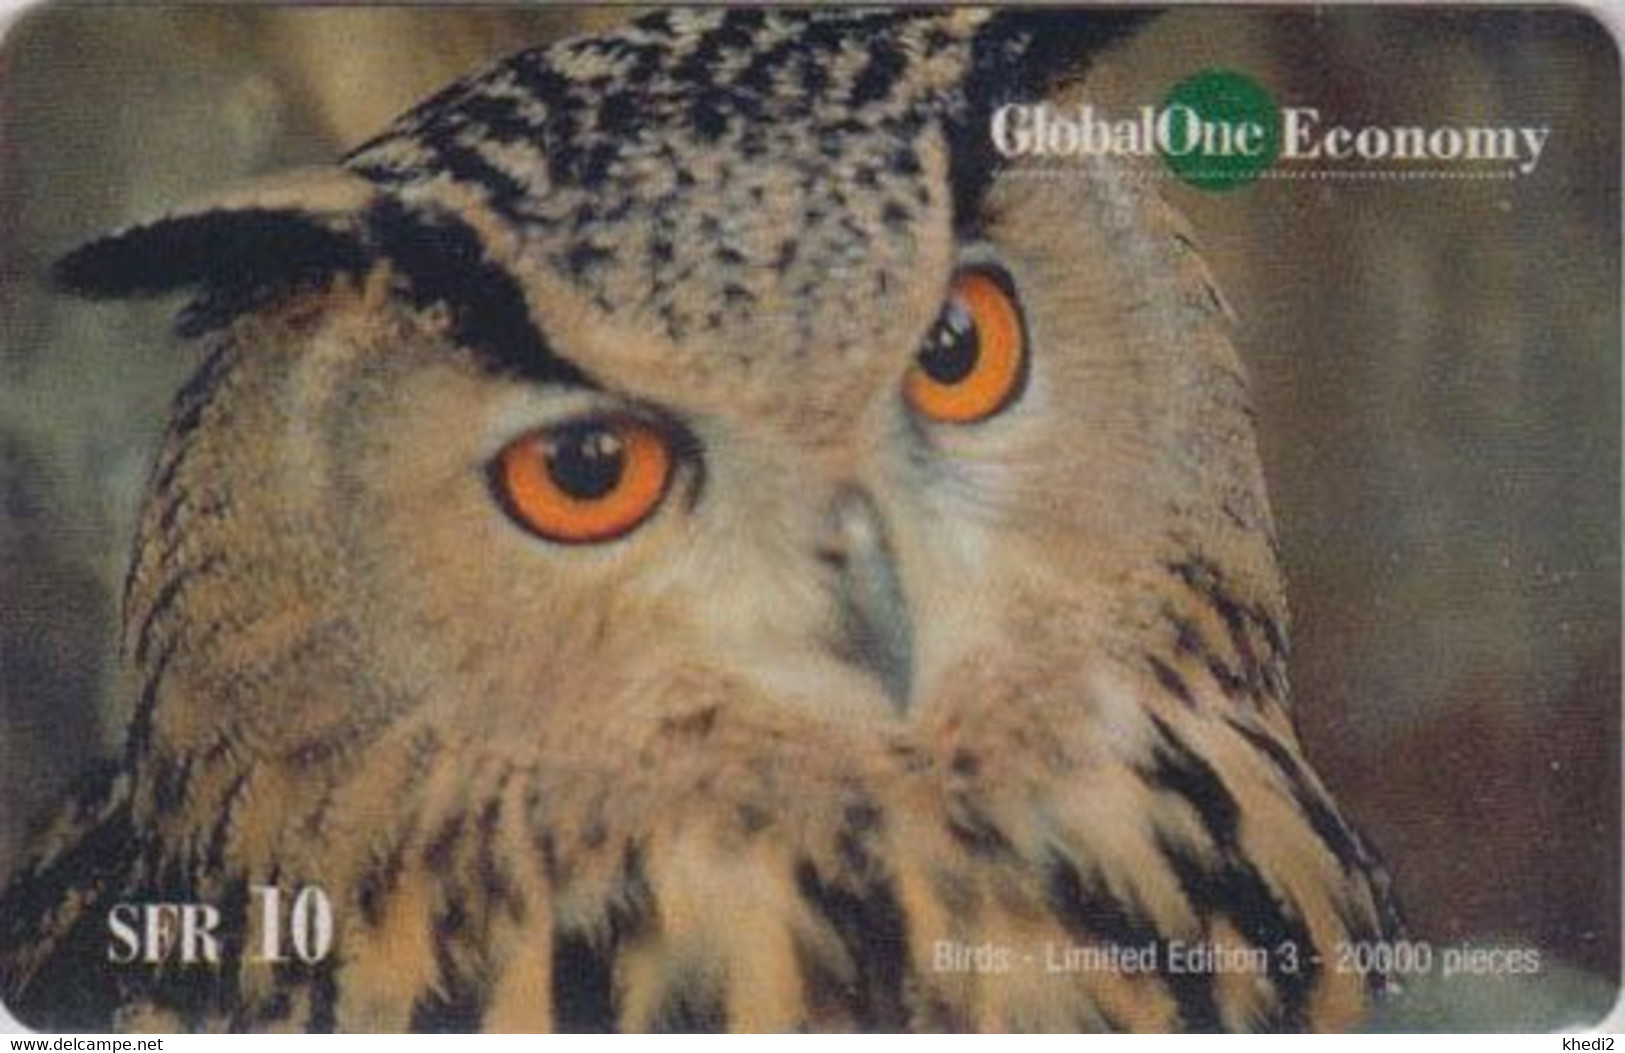 Télécarte Prépayée SUISSE GLOBAL ONE - ANIMAL - OISEAU - HIBOU - OWL BIRD - Switzerland Prepaid Phonecard - 5149 - Owls